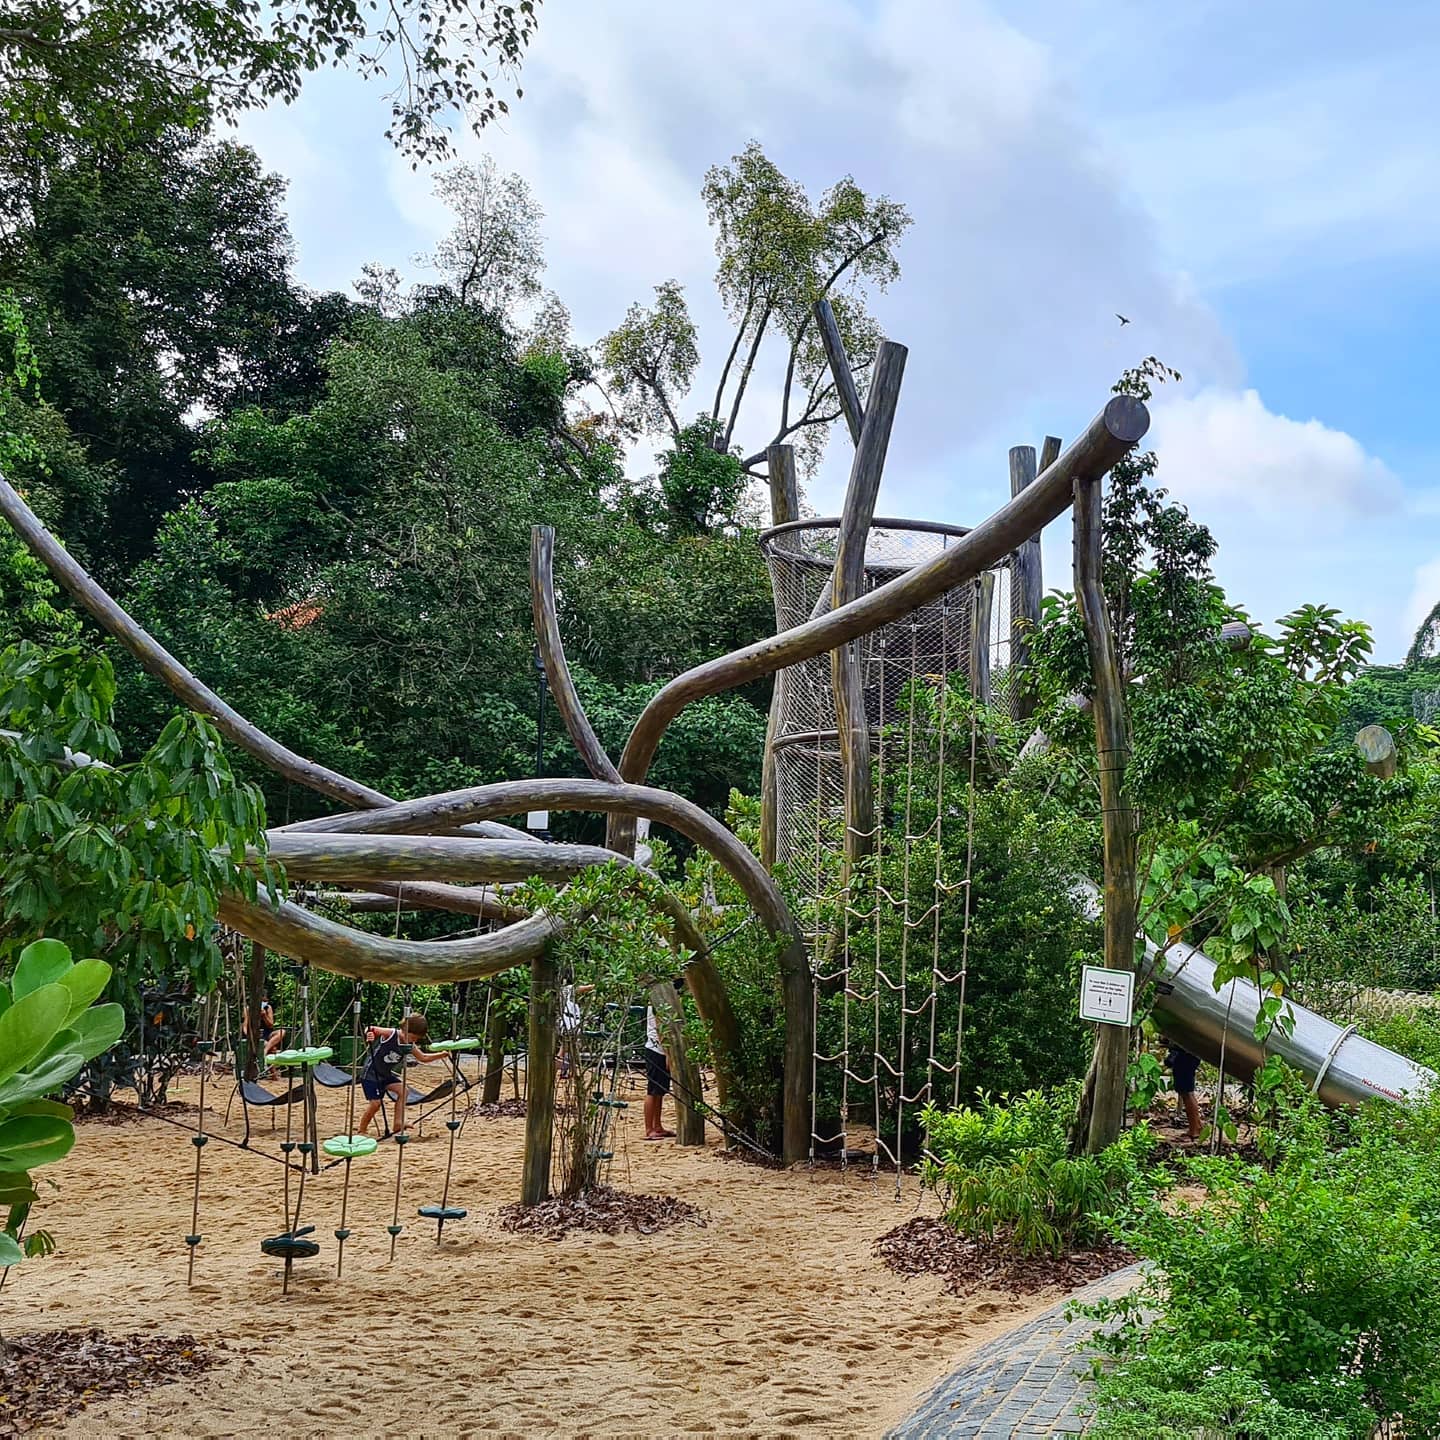 Free playgrounds in Singapore - COMO Adventure Grove